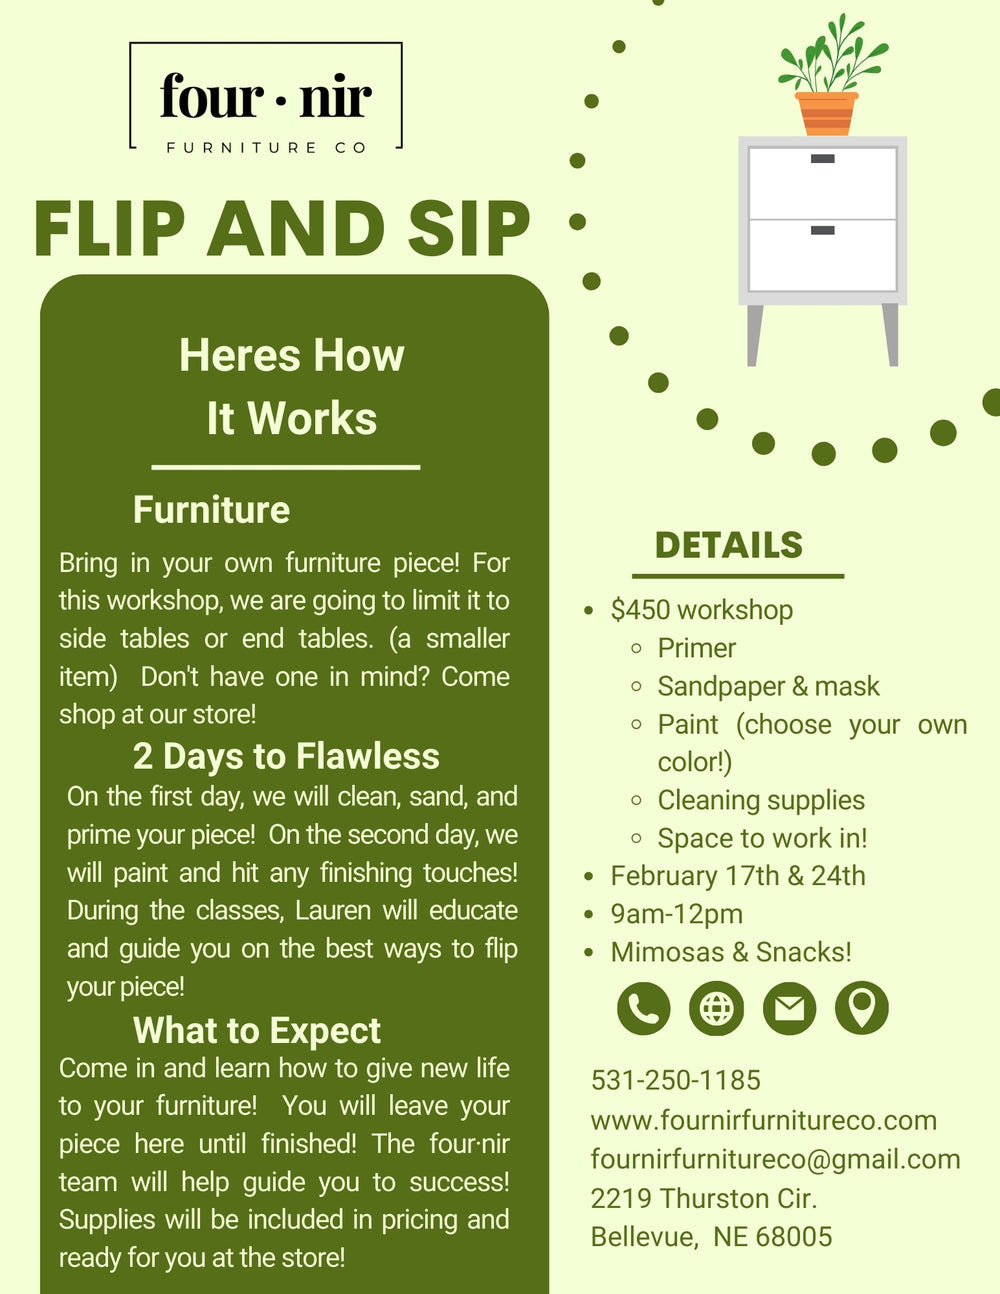 Flip & Sip - Furniture Flipping Workshop February 17th & 24th